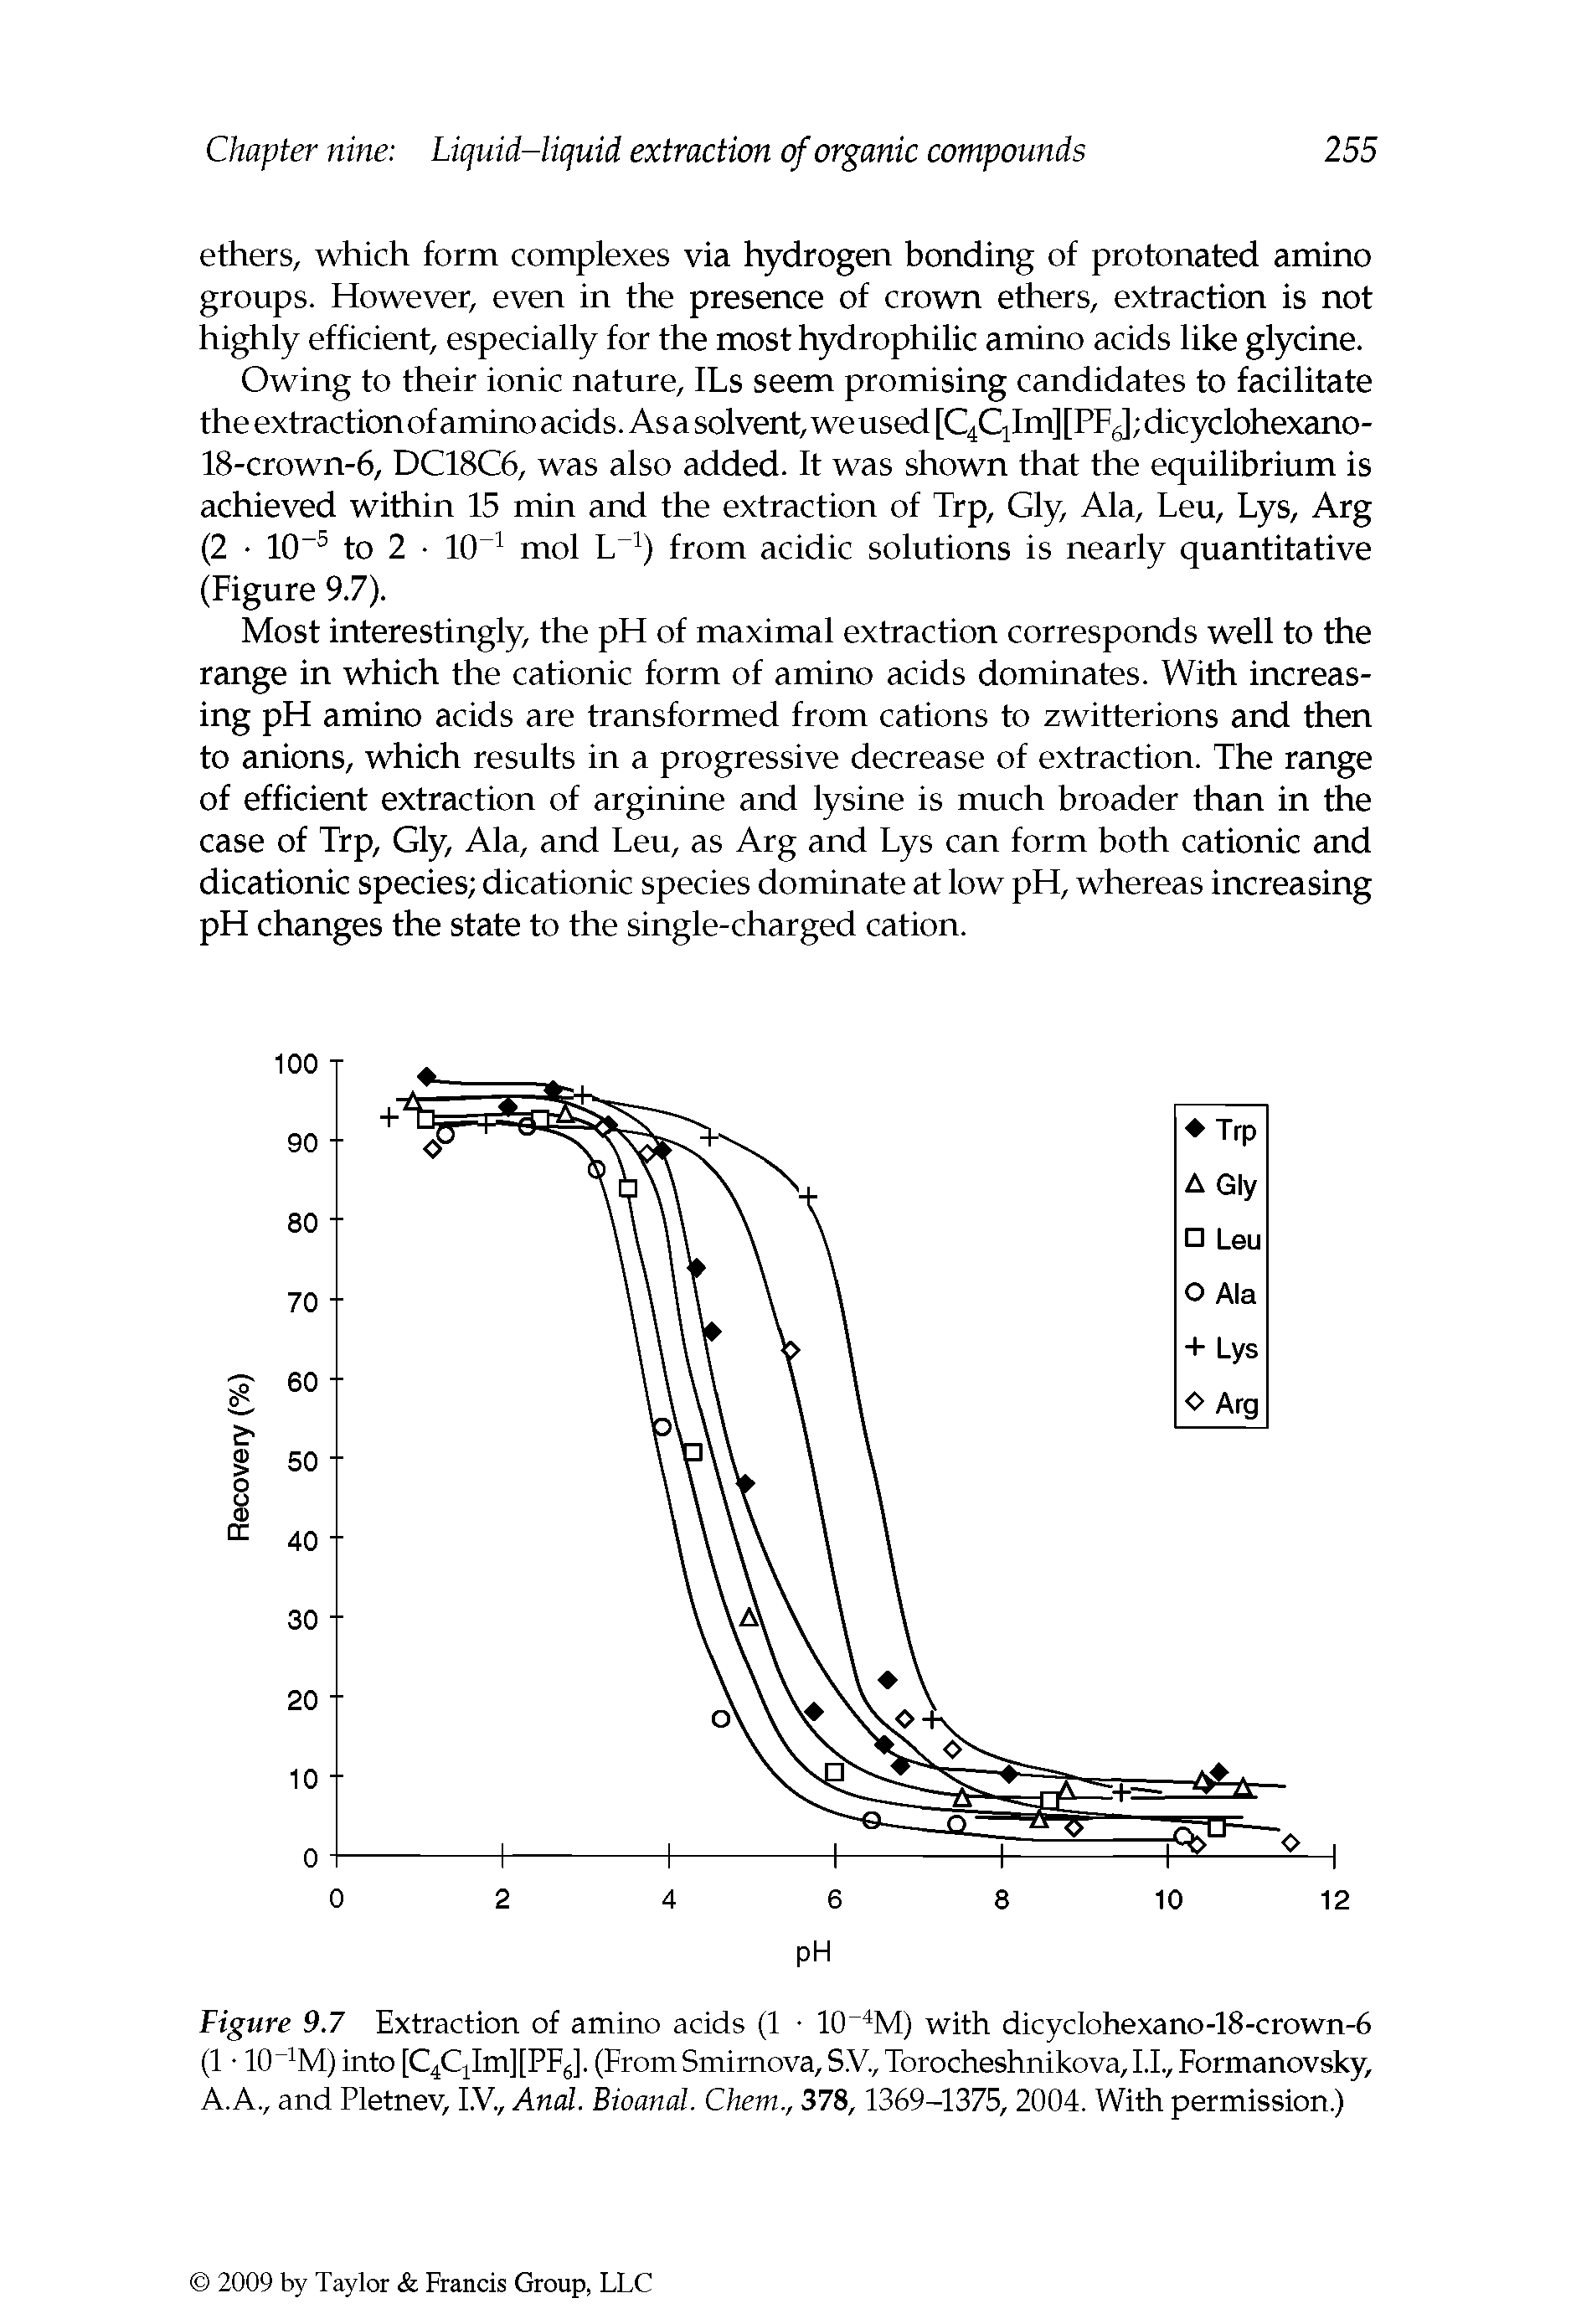 Figure 9.7 Extraction of amino acids (1 lO M) with dicyclohexano-18-crown-6 (1 10 into [C4QIm][PF5]. (From Smirnova, S.V., Torocheshnikova, I.I., Formanovsky, A. A., and Pletnev, I.V., Anal. Bioanal. Chem., 378, 1369-1375, 2004. With permission.)...